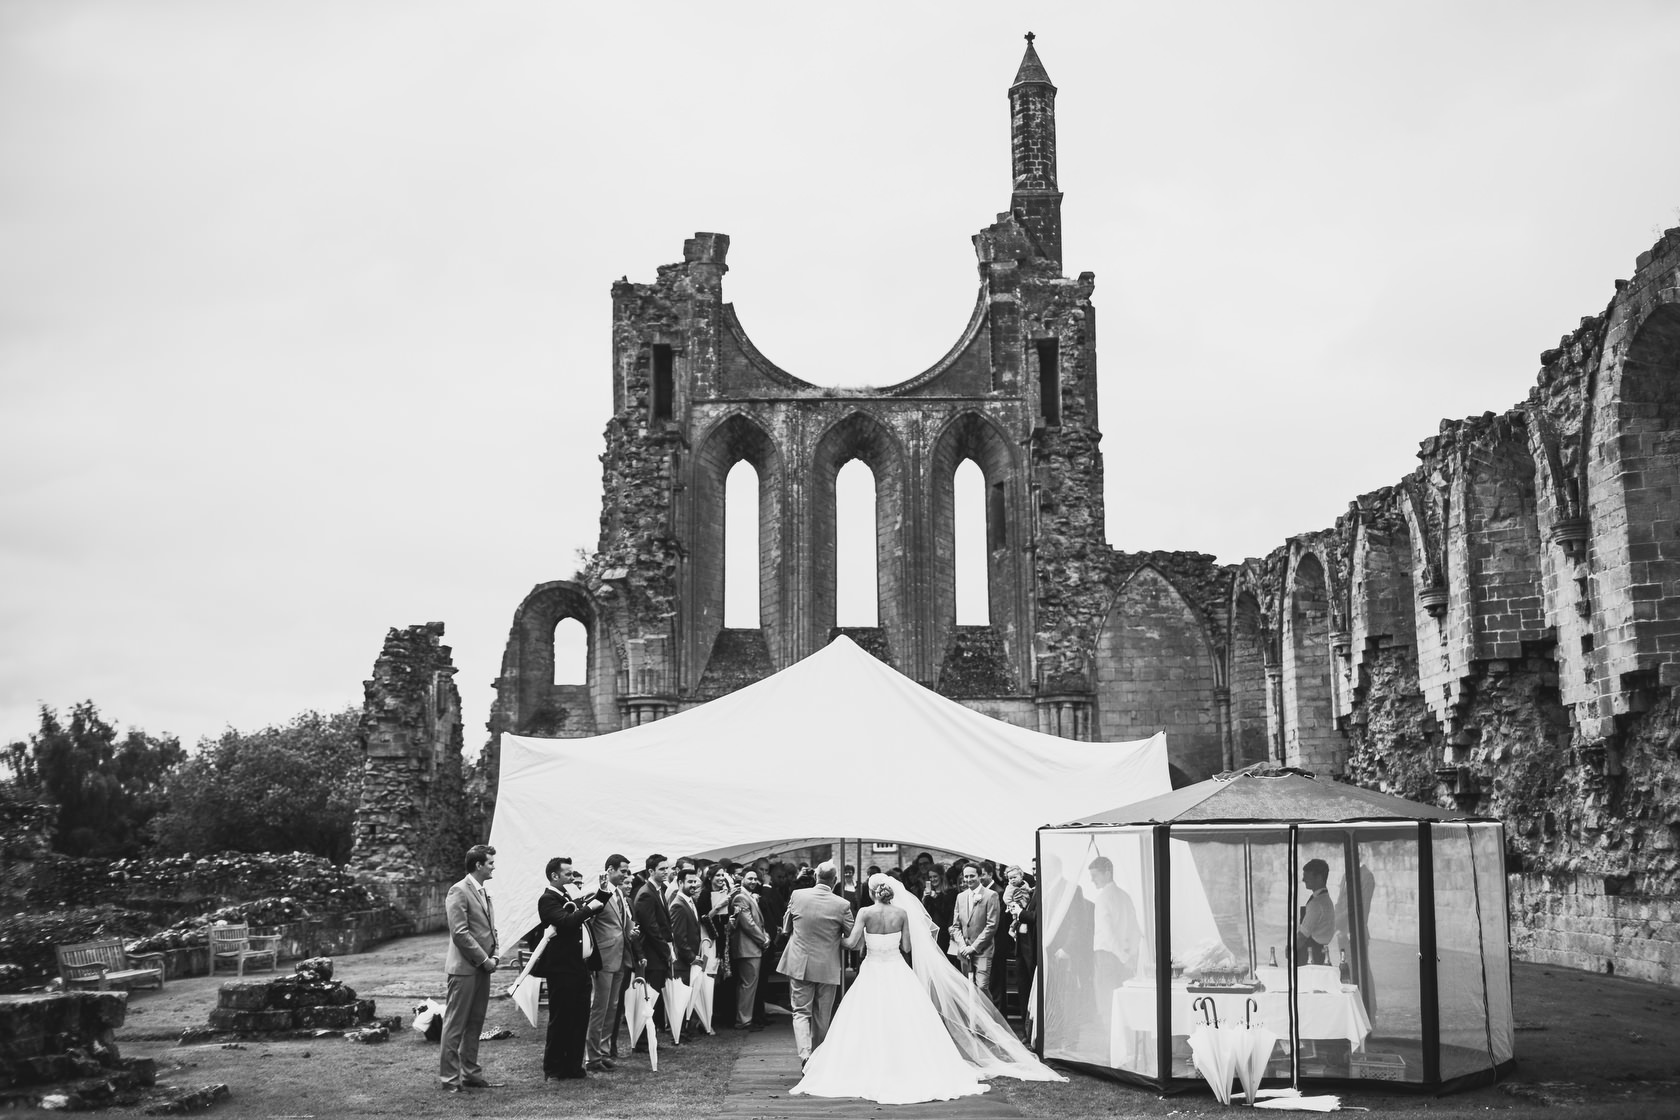 Byland abbey wedding photographers - arj photography